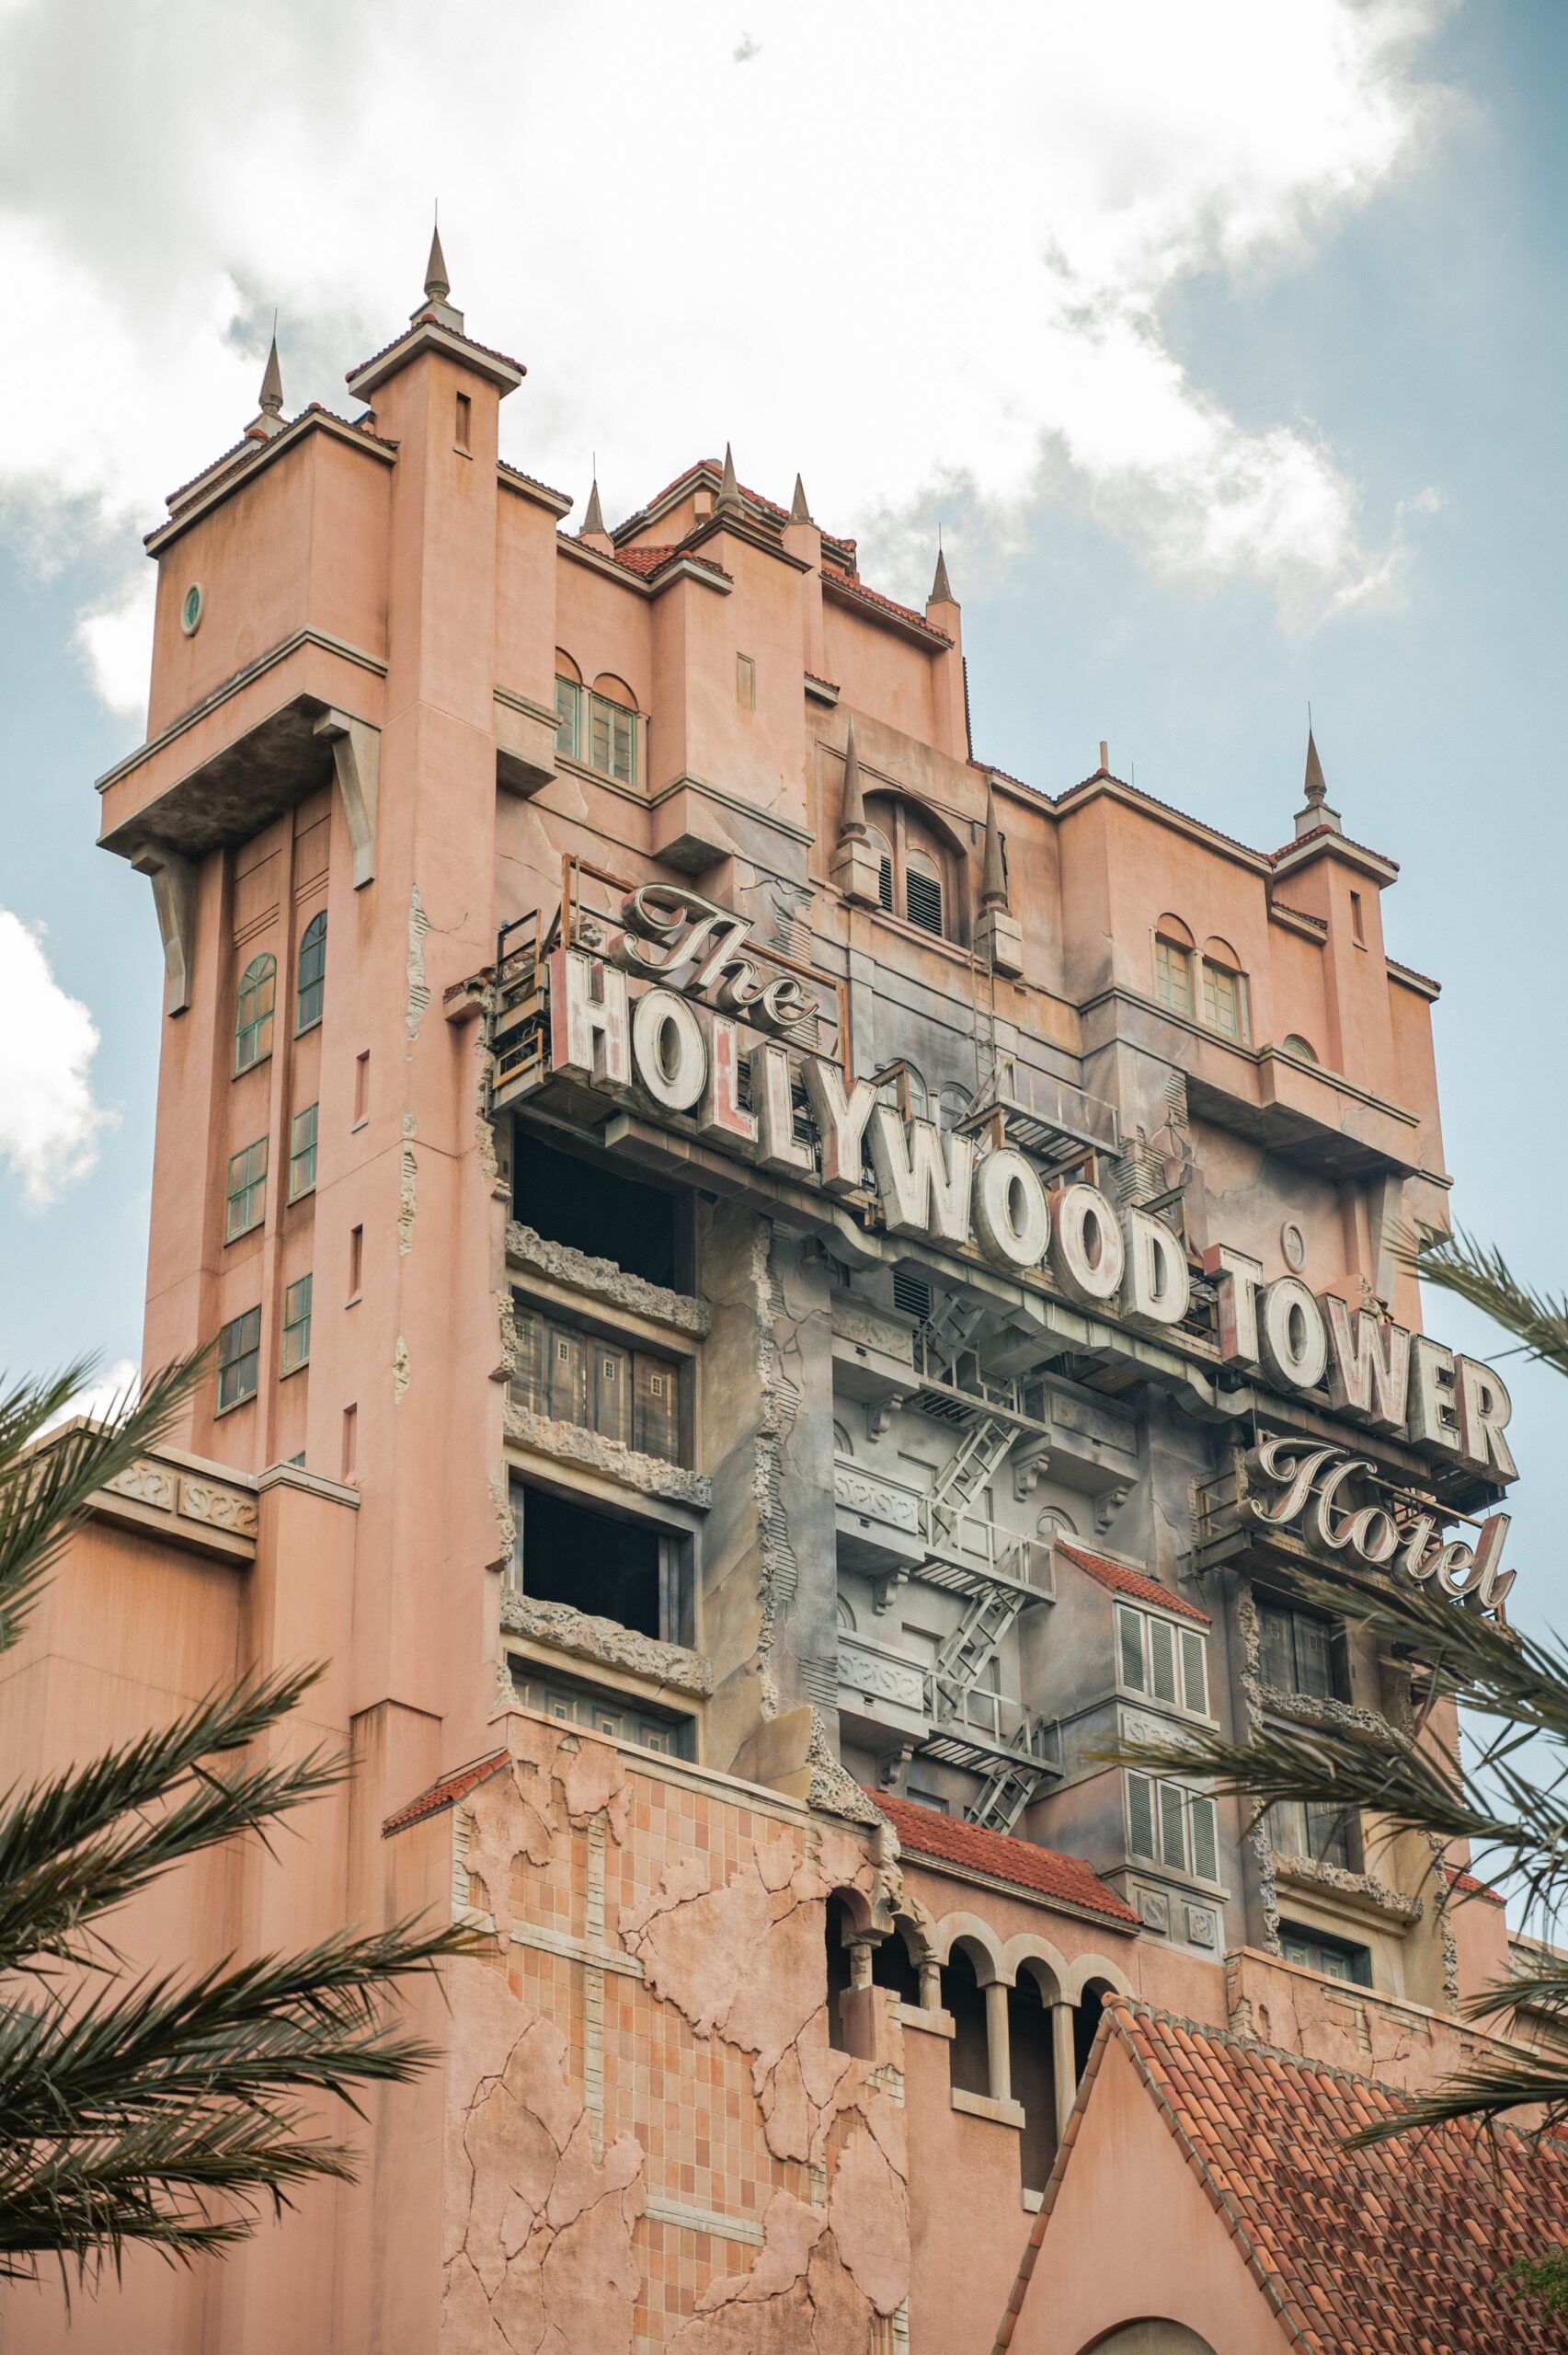 Hollywood Studios Tower of Terror